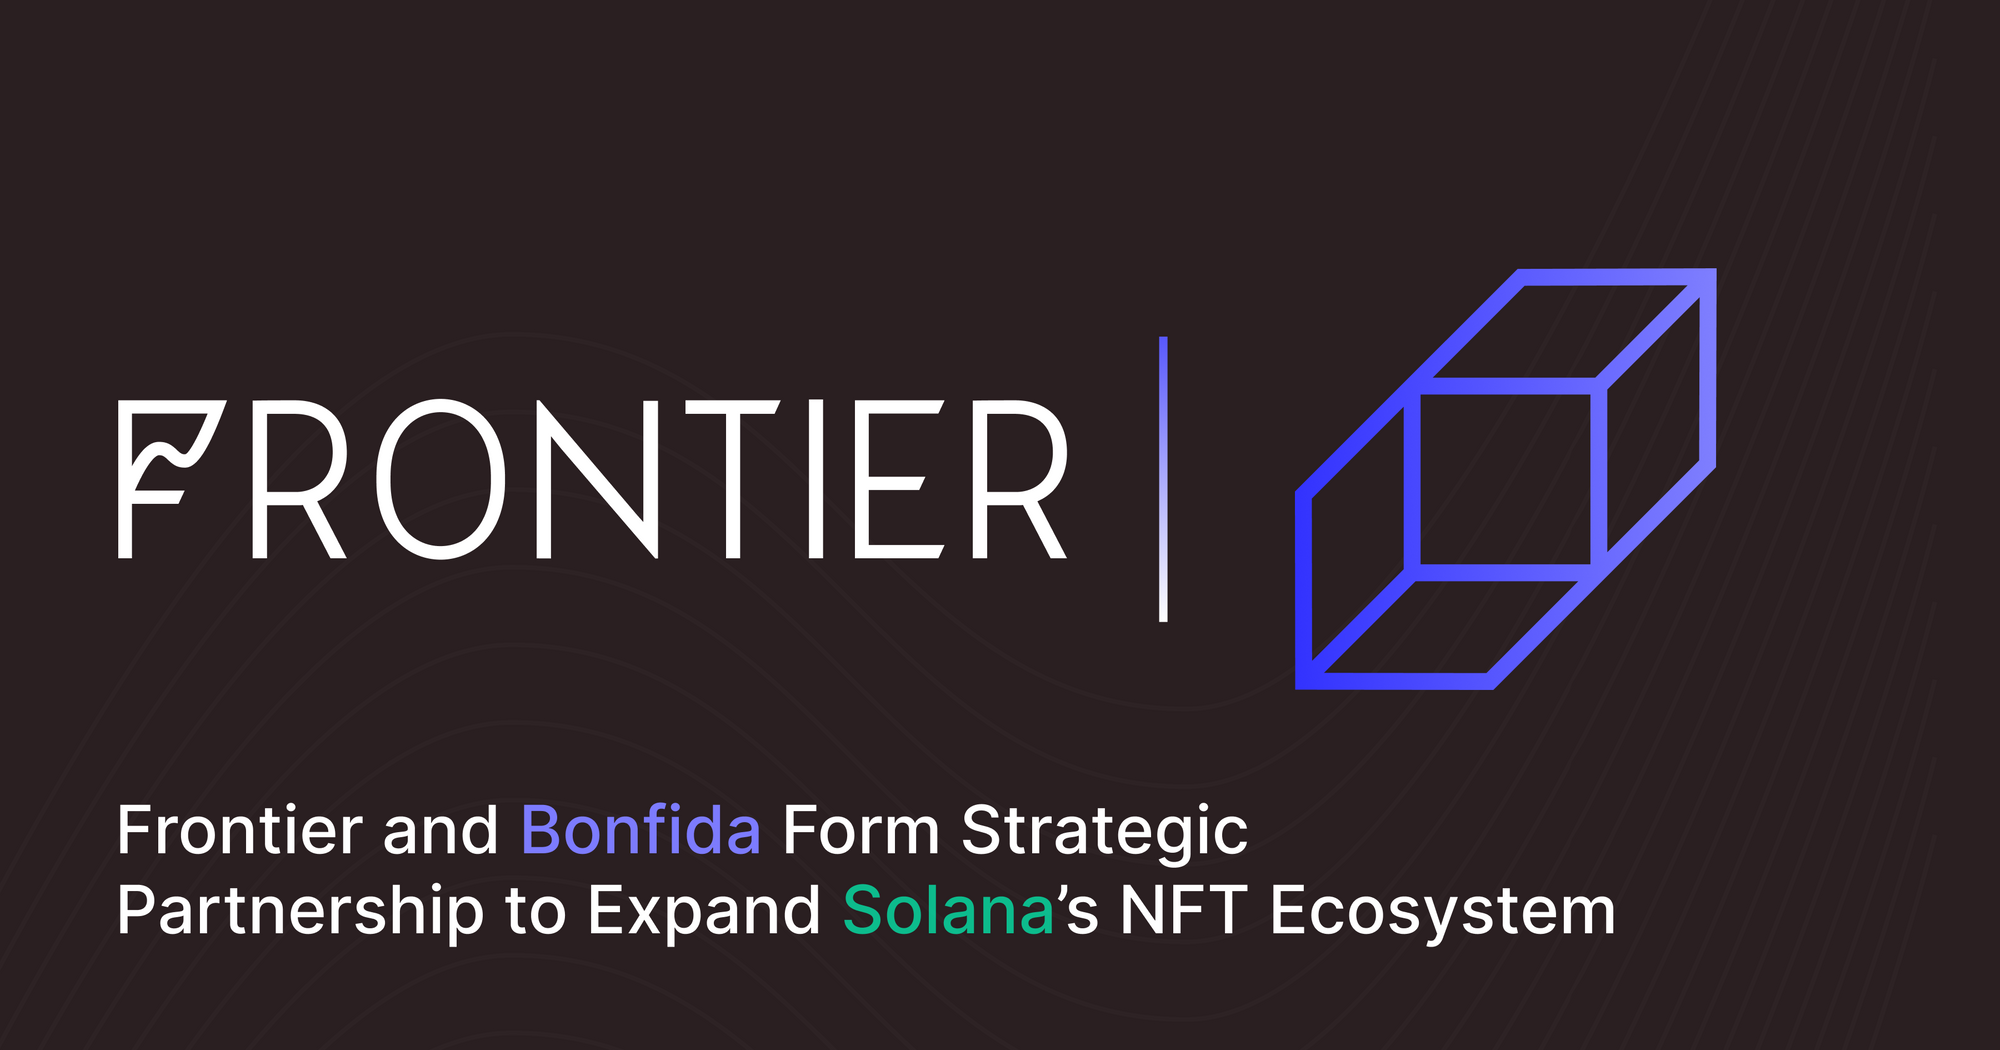 Frontier and Bonfida Form Strategic Partnership to Expand Solana’s NFT Ecosystem